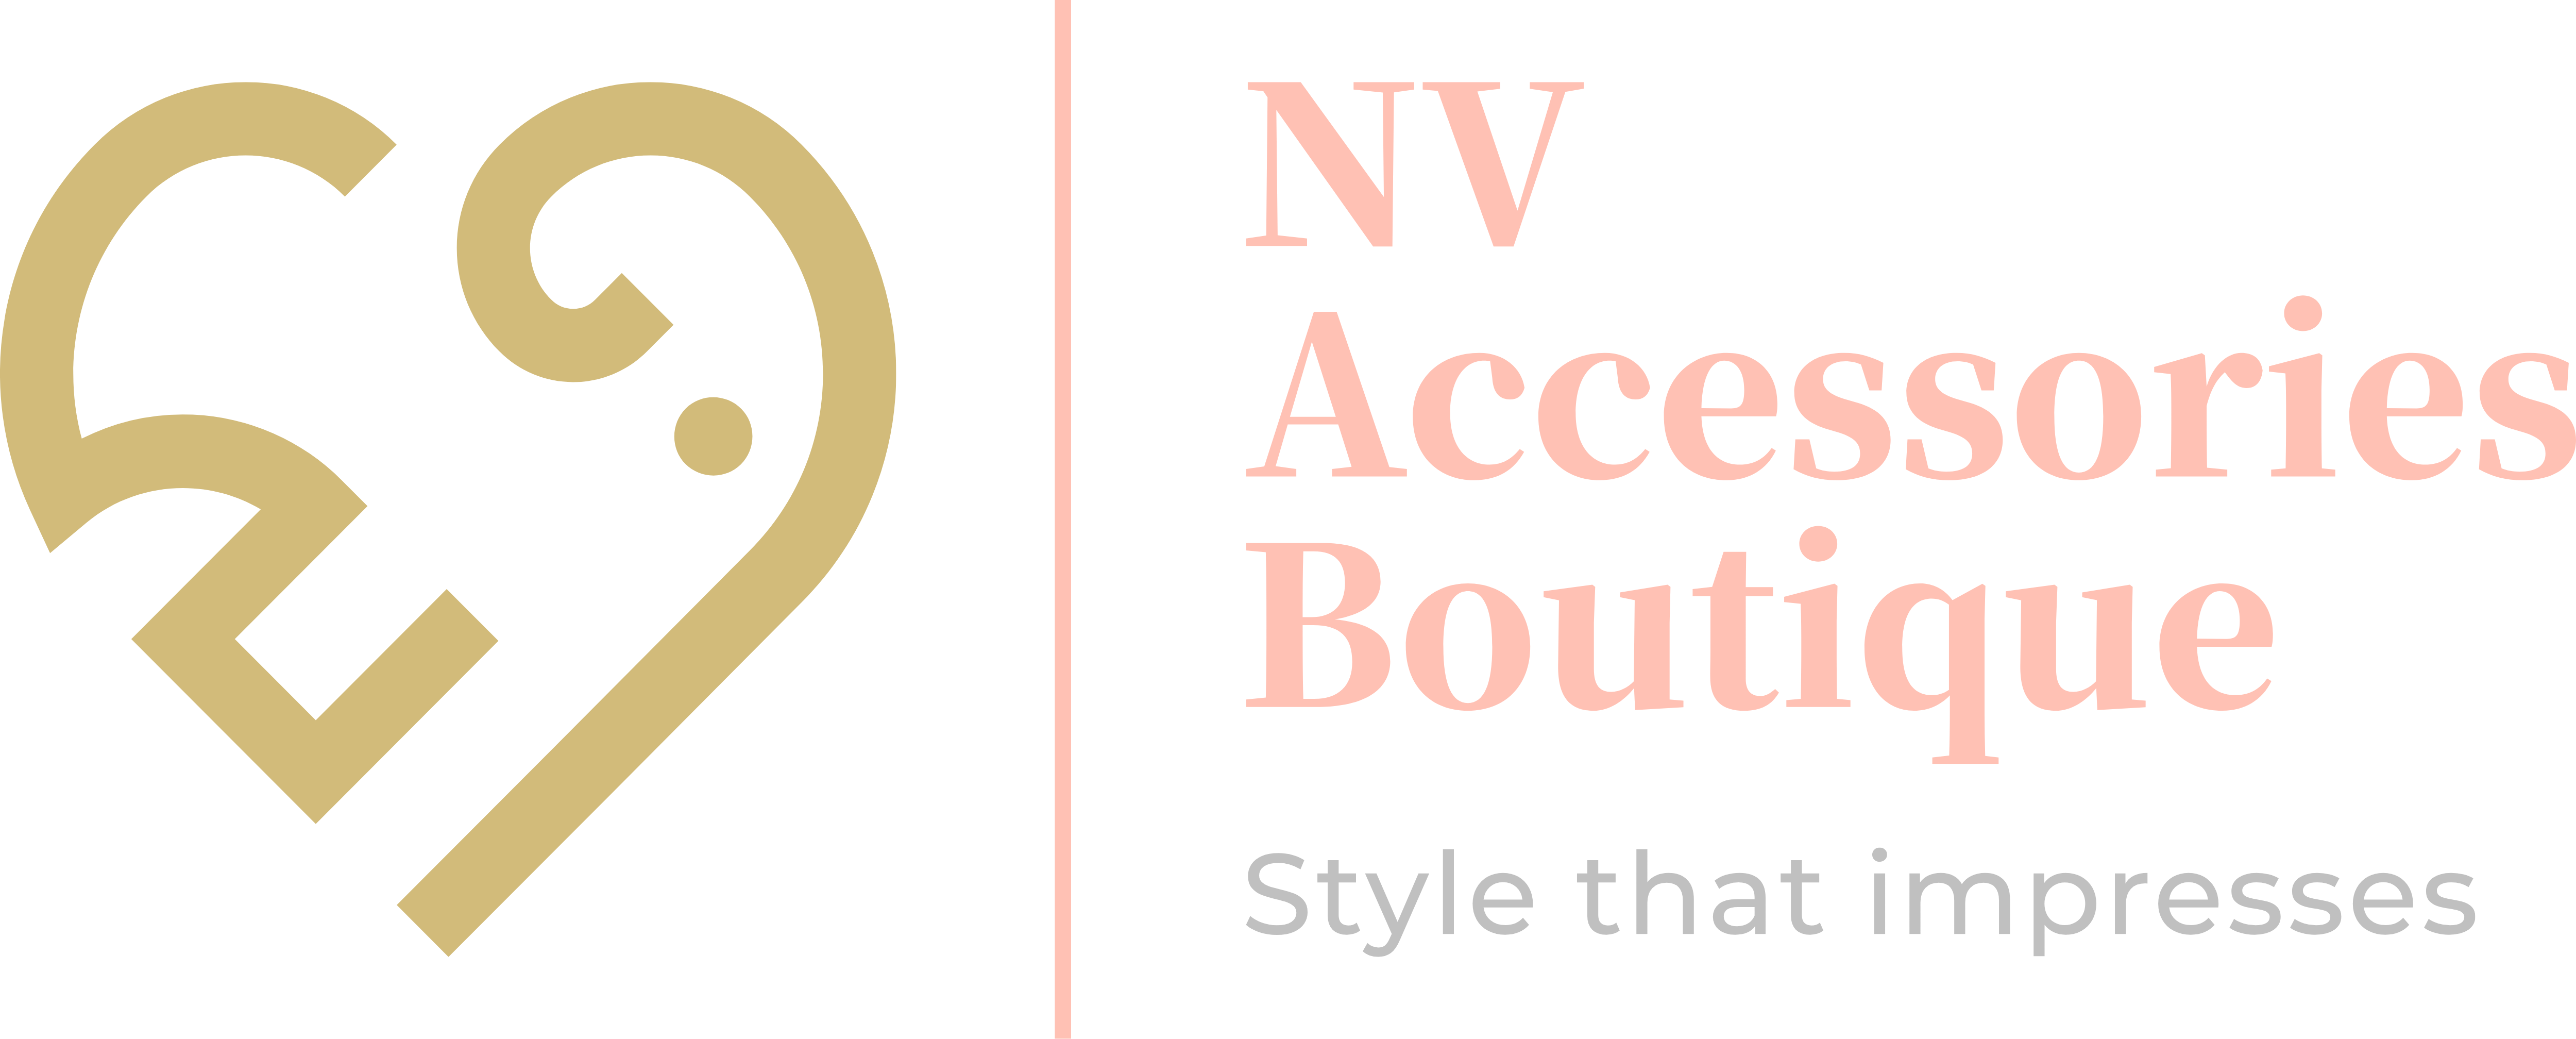 NV Accessories Boutique